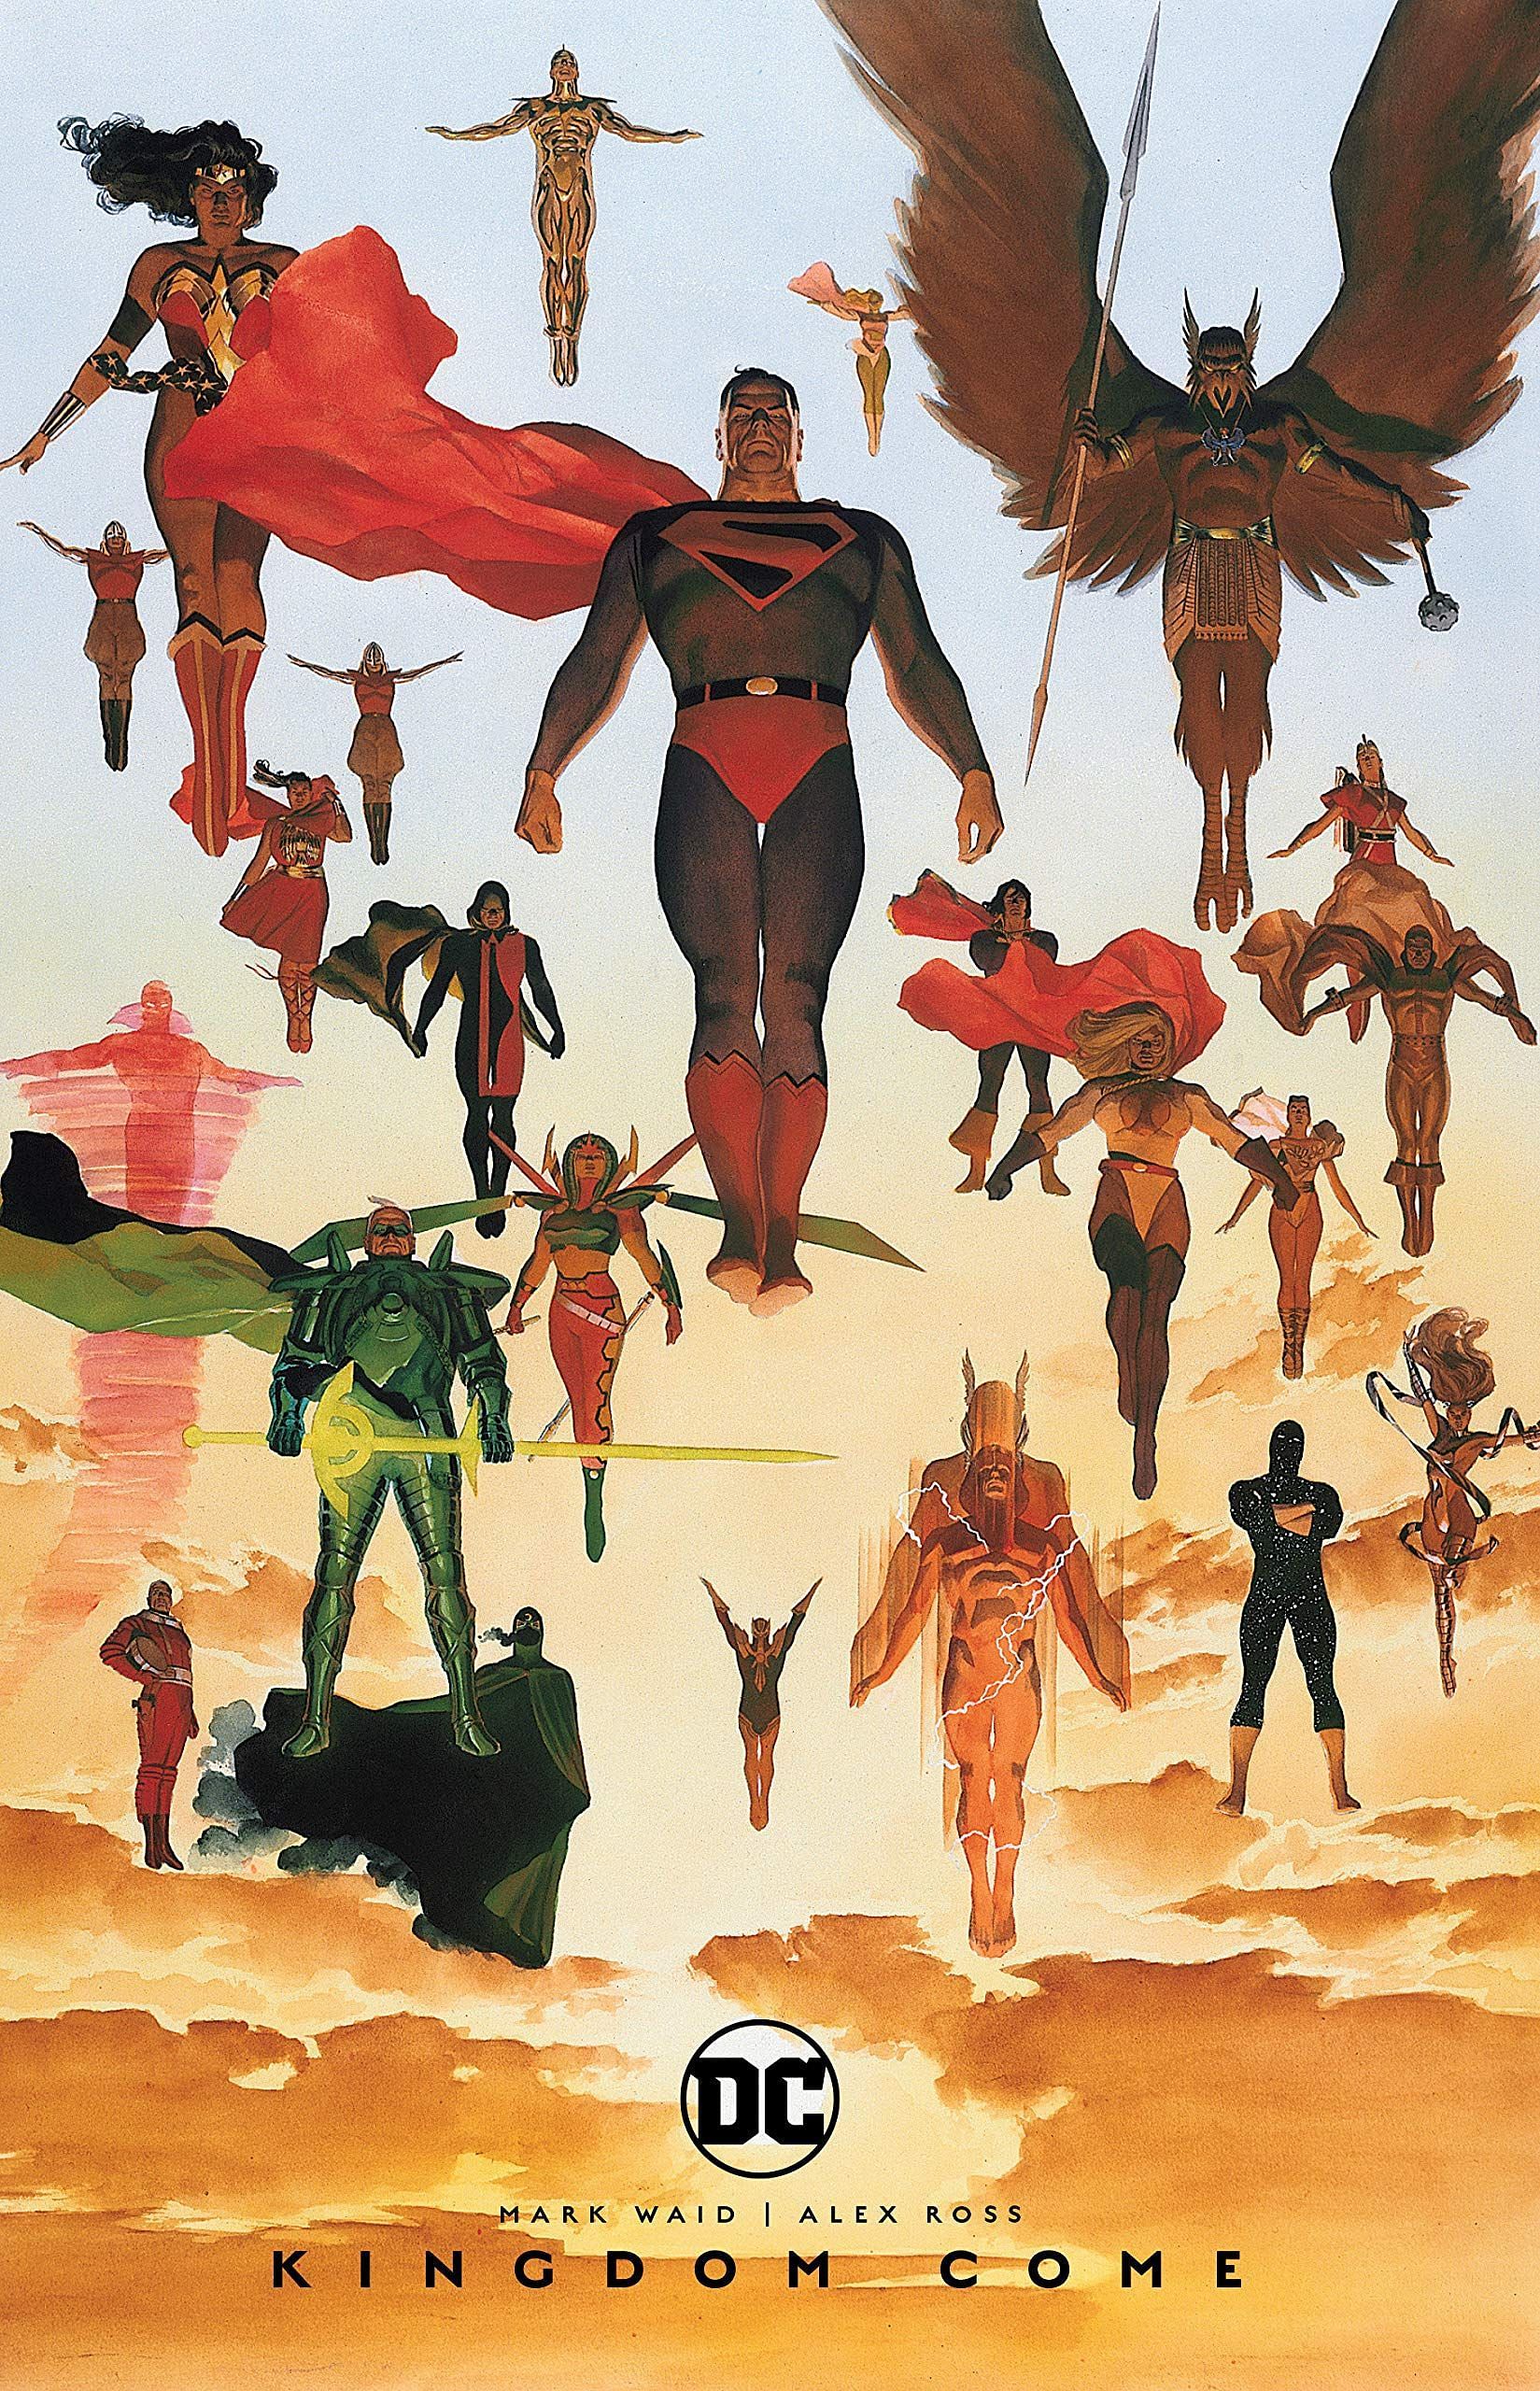 Kingdome Come Cover (Image via DC Comics)